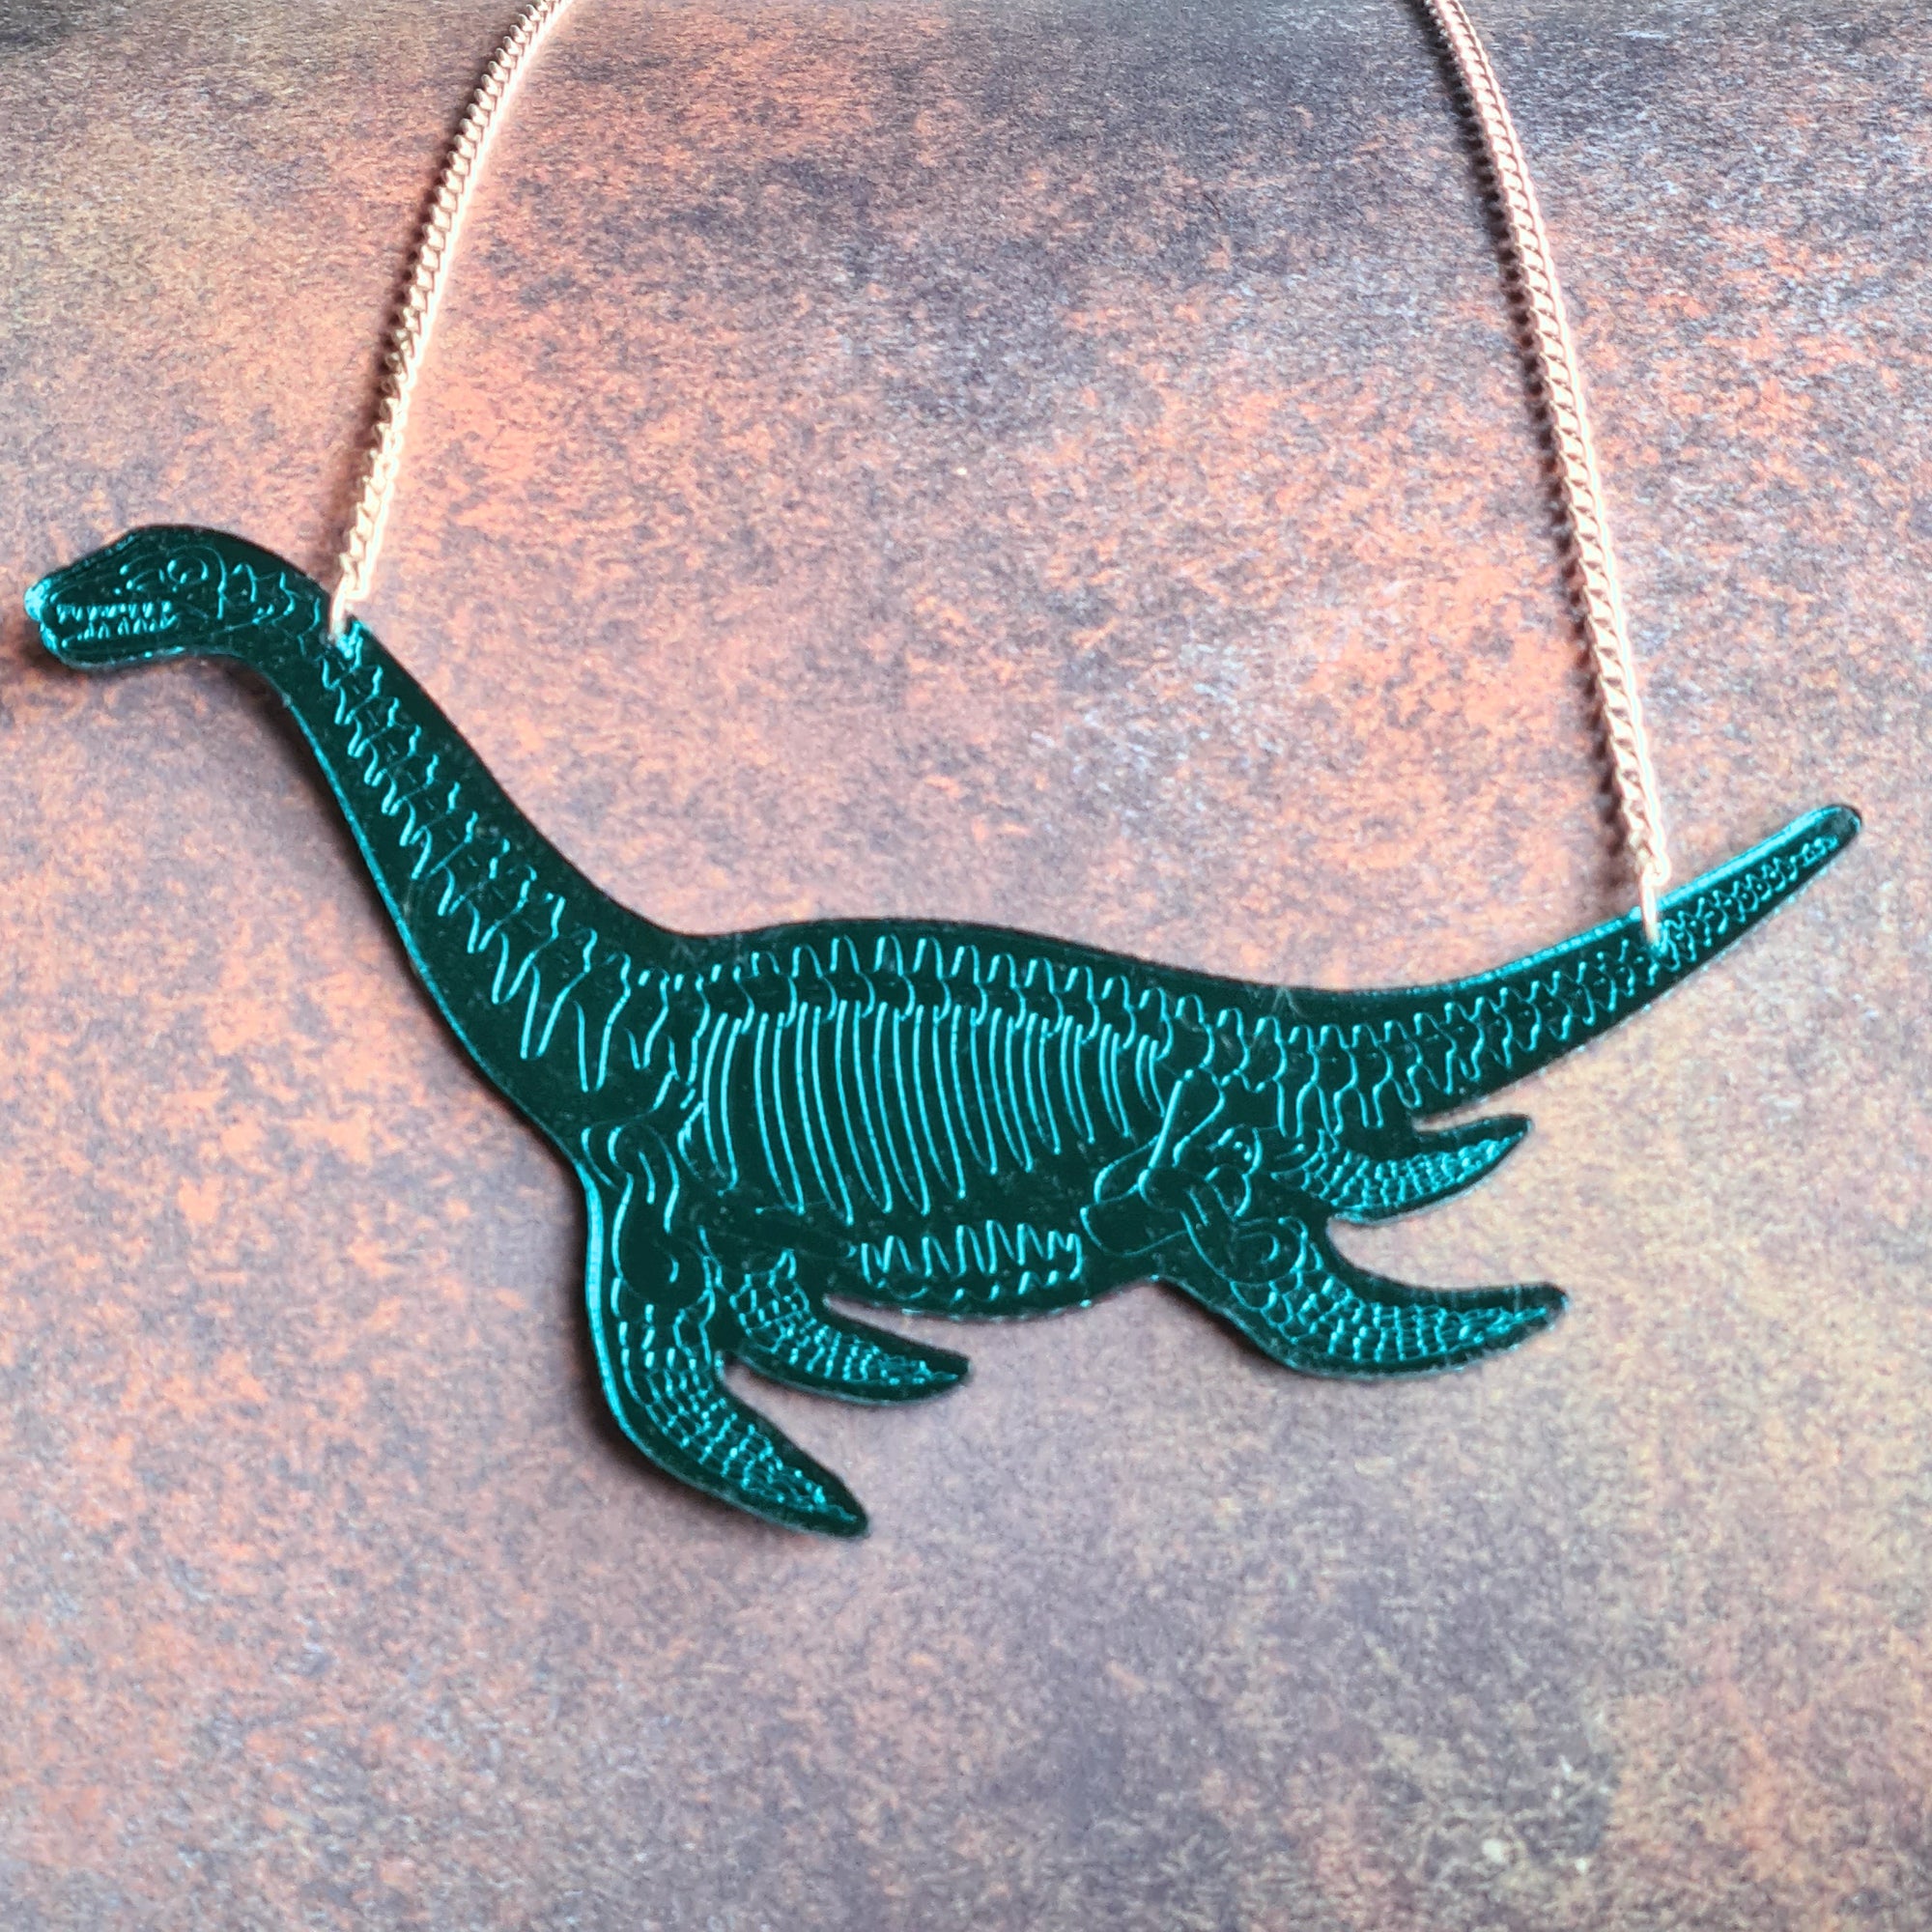 Plesiosaur (Nessie) Skeleton Necklace by Designosaur